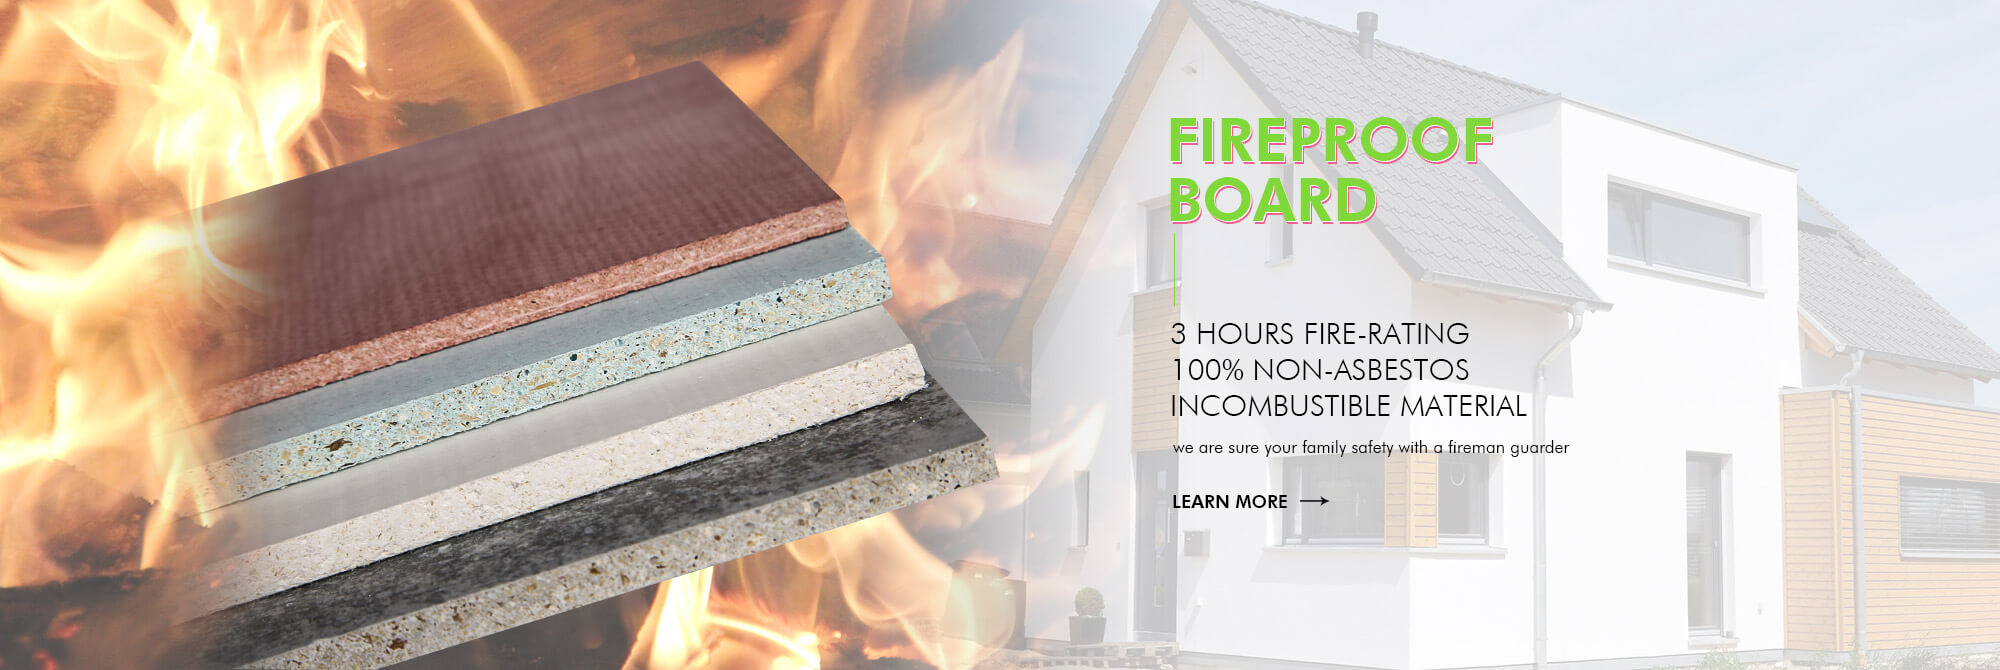 Fireproof board direct sales